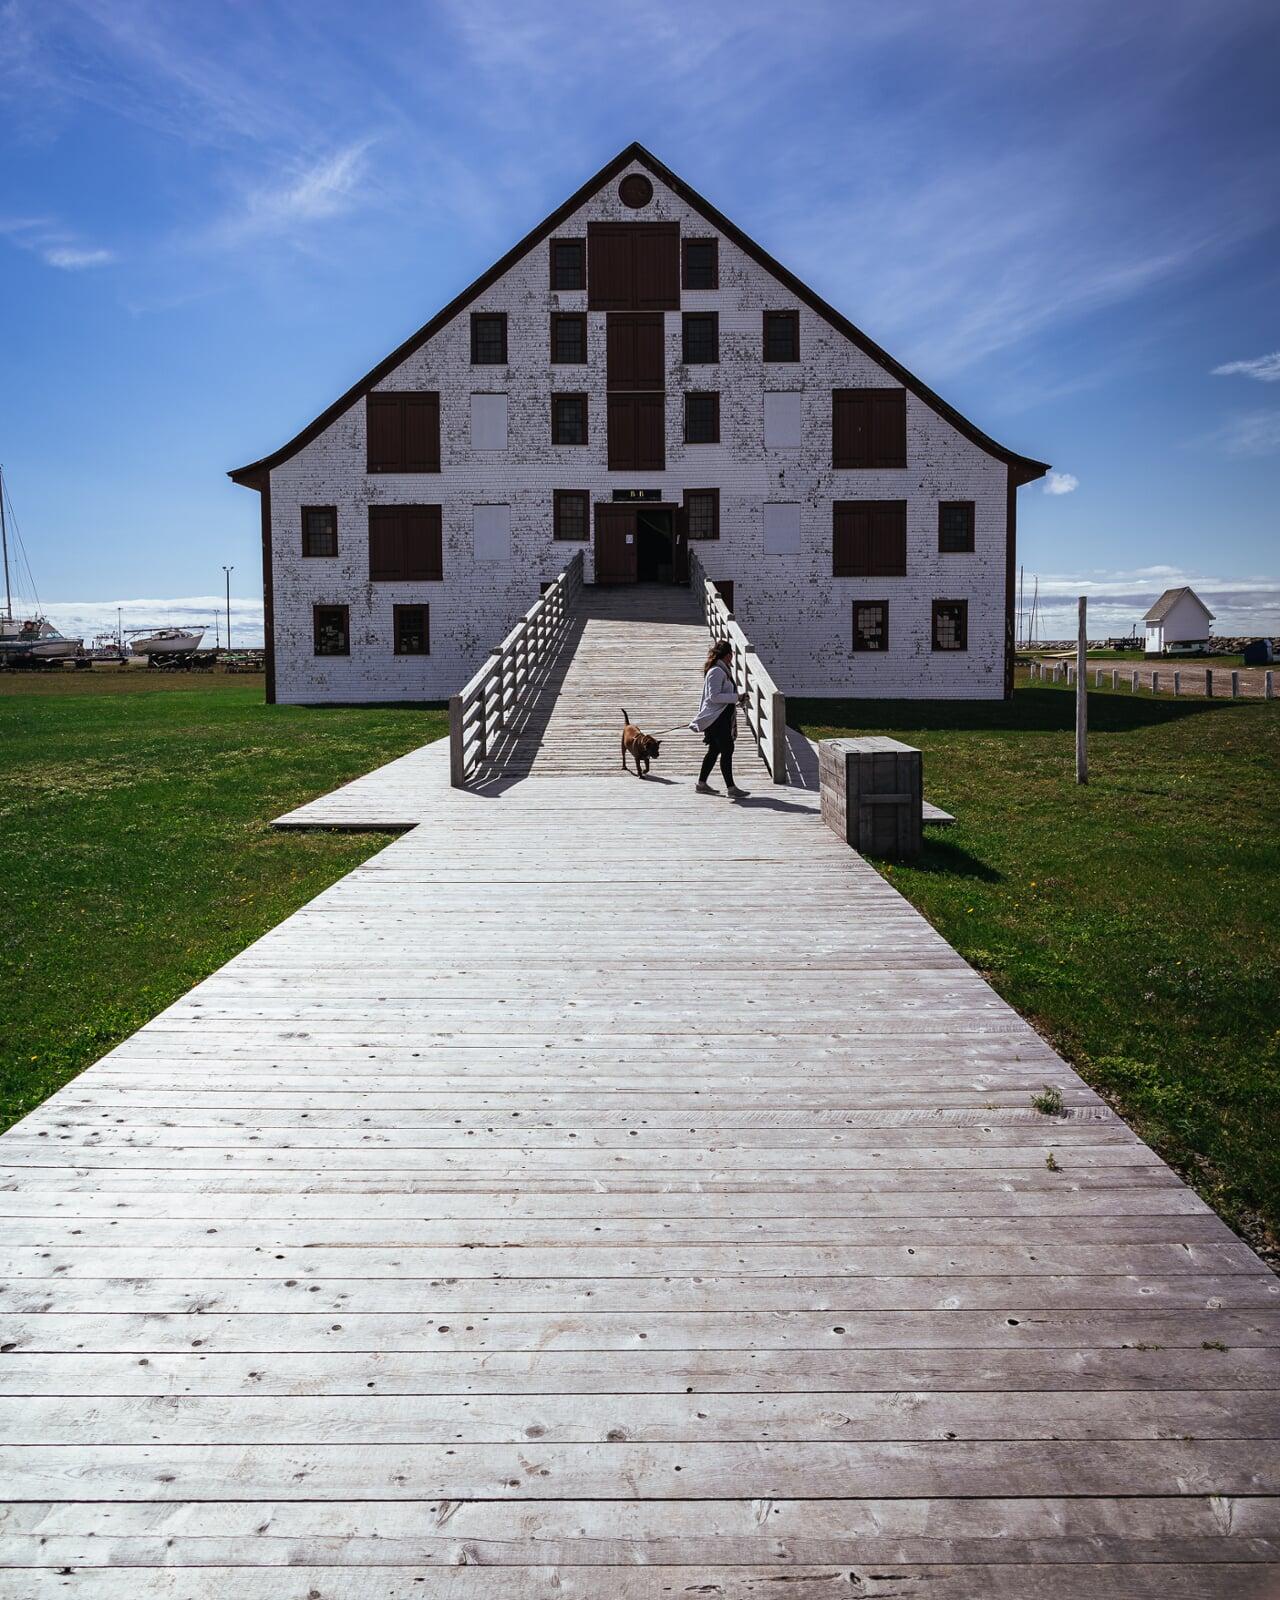 The LeBoutillier Warehouse in Paspebiac historic fishing village in Gaspesie, Canada